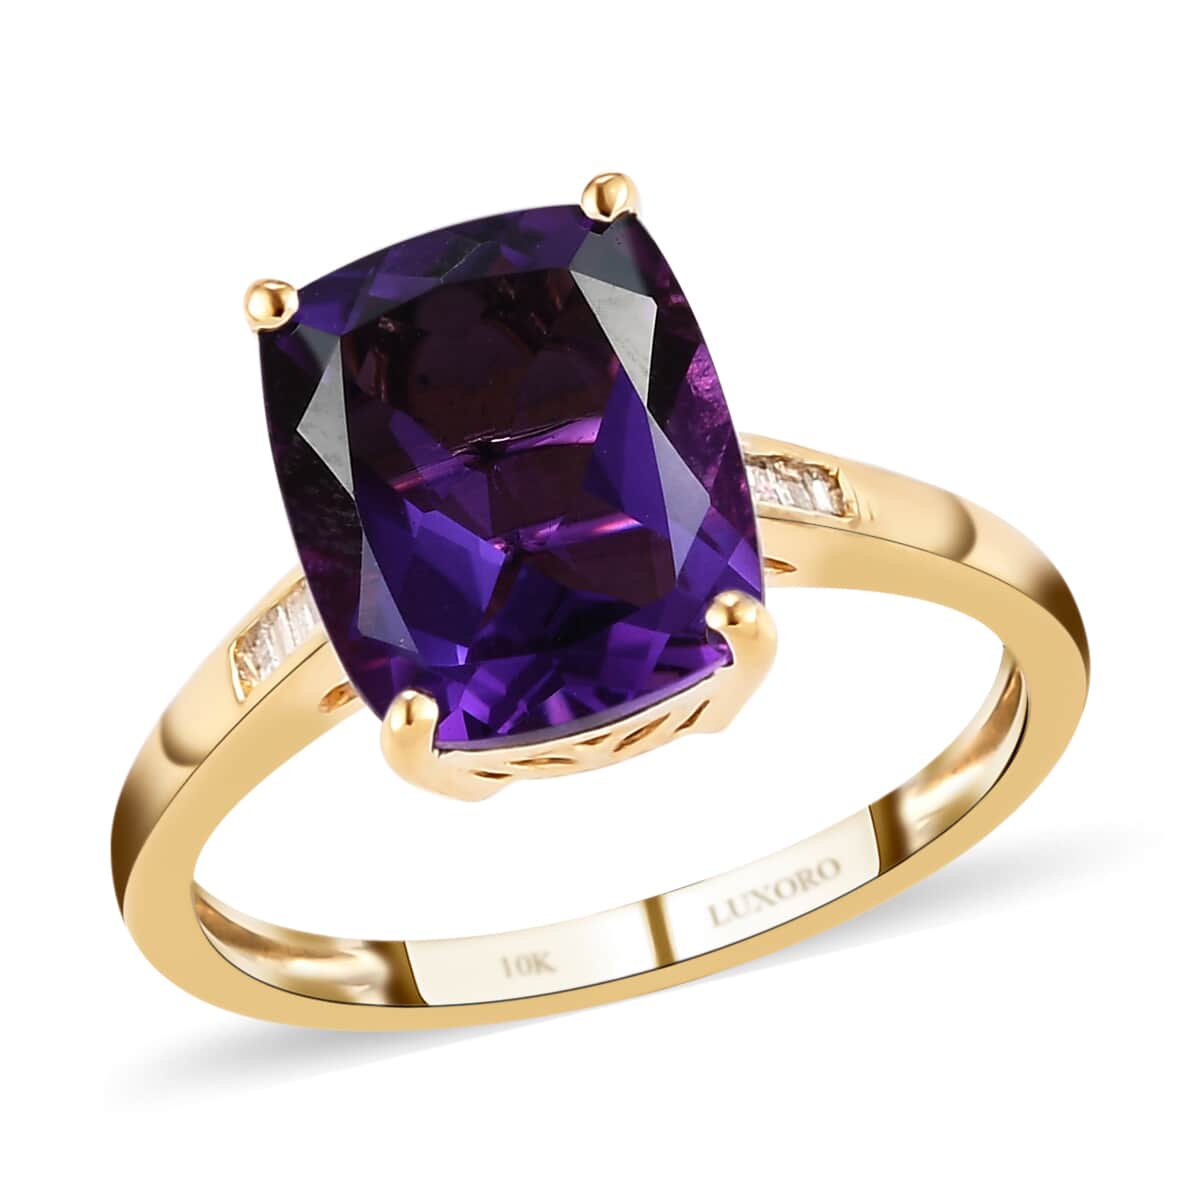 Luxoro 10K Yellow Gold AAA Mashamba Amethyst and G-H I3 Diamond Ring (Size 9.0) 3.90 ctw image number 0